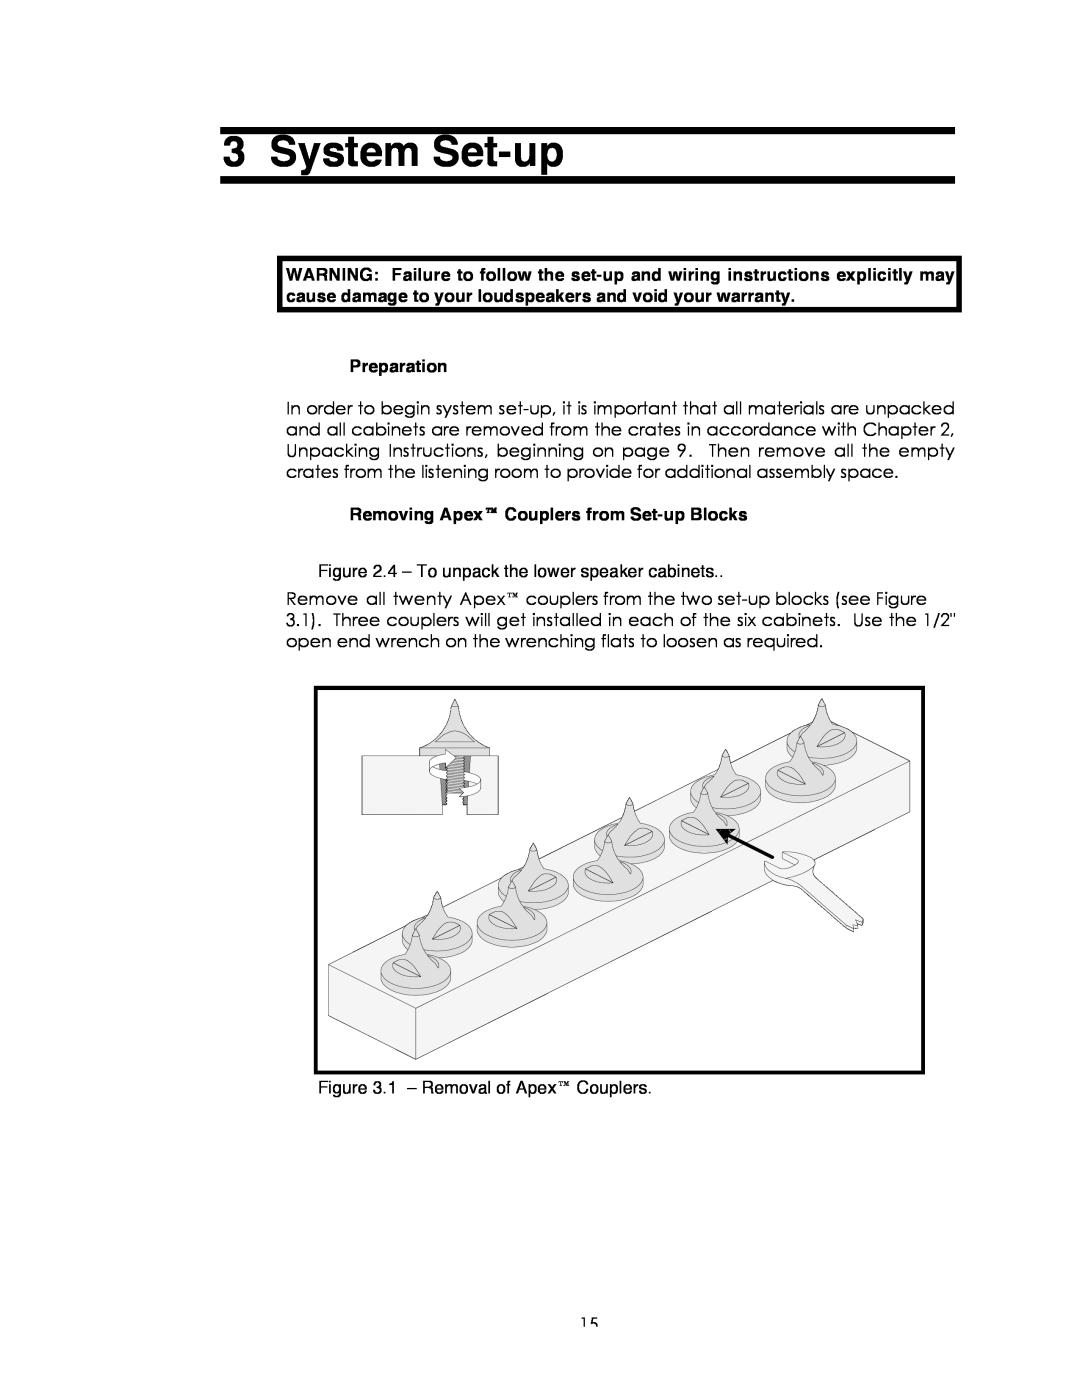 Avalon Acoustics Sentinel manual System Set-up, Preparation, Removing Apex‘ Couplers from Set-upBlocks 